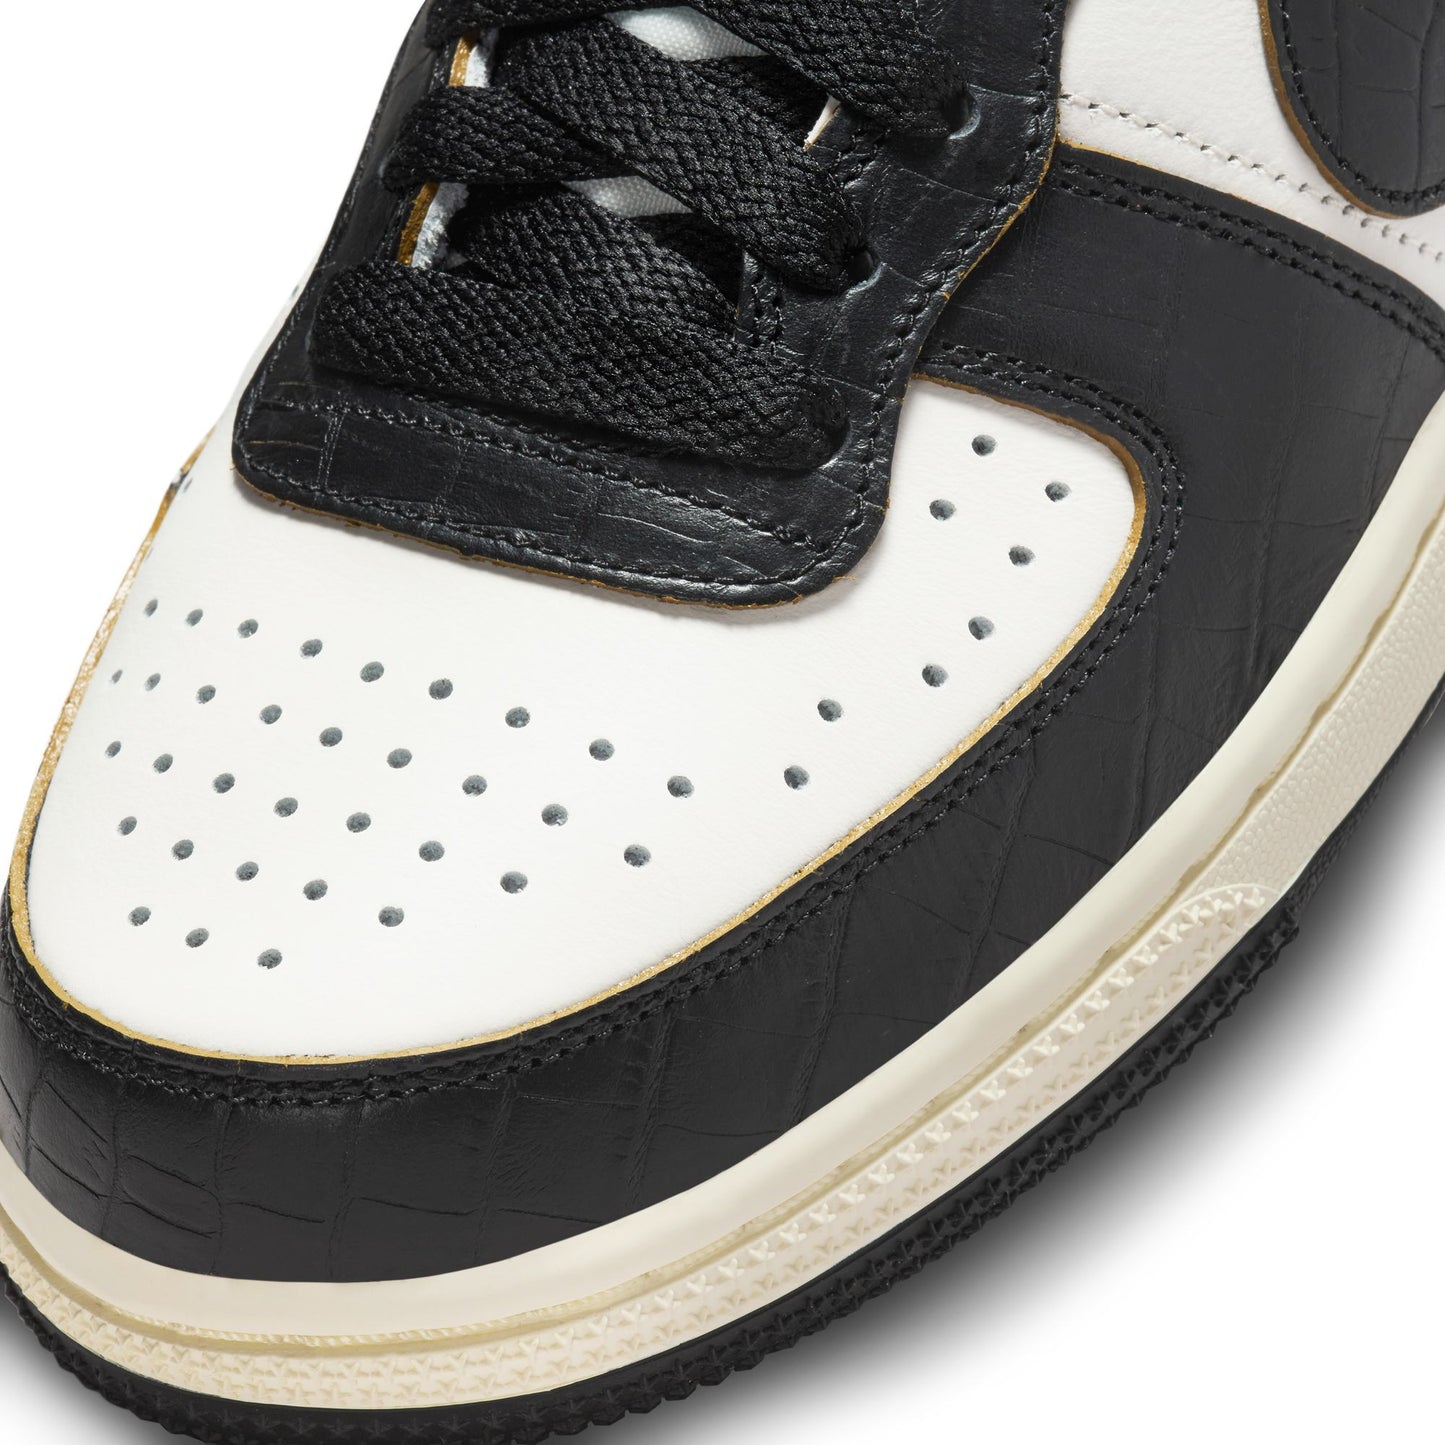 Nike Terminator Low "Black Croc" PRM - FQ8127-030